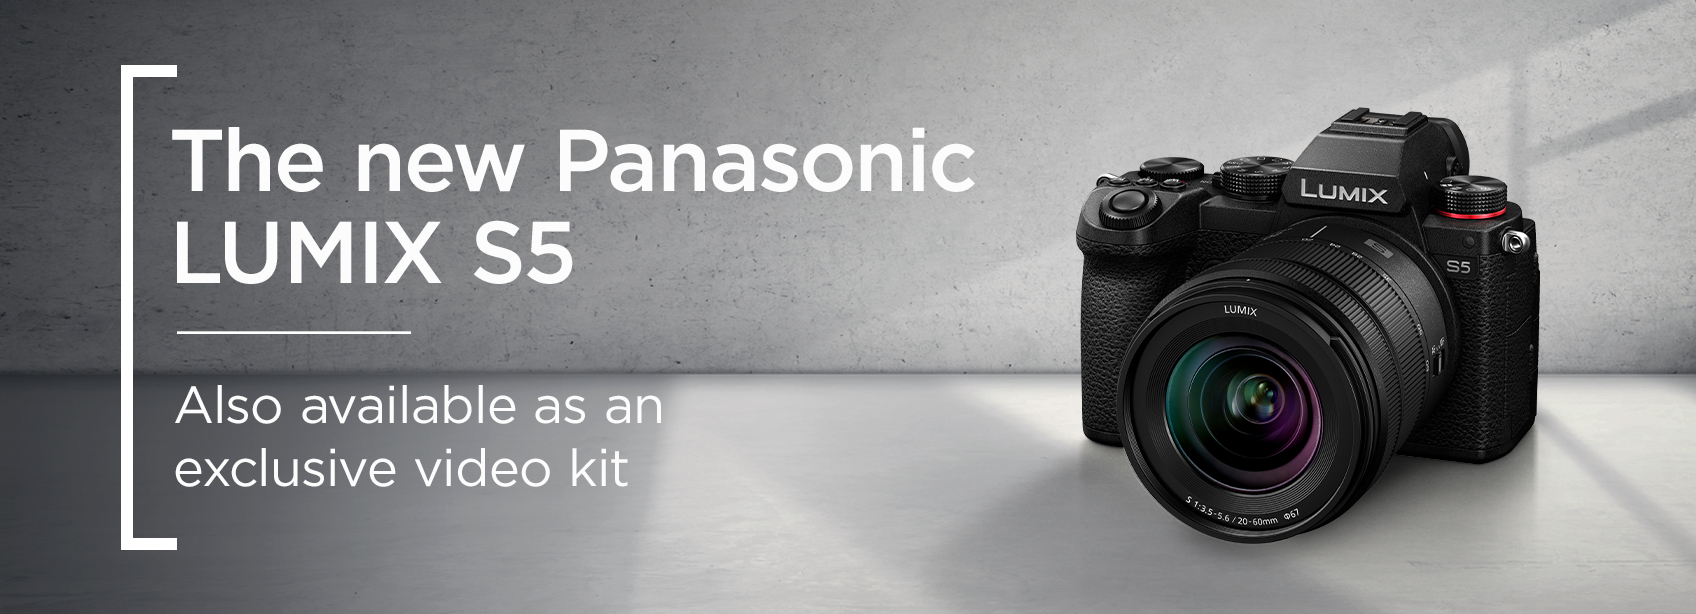 wex-Panasonic-LUMIXS5-Kit-LPH-090920.jpg